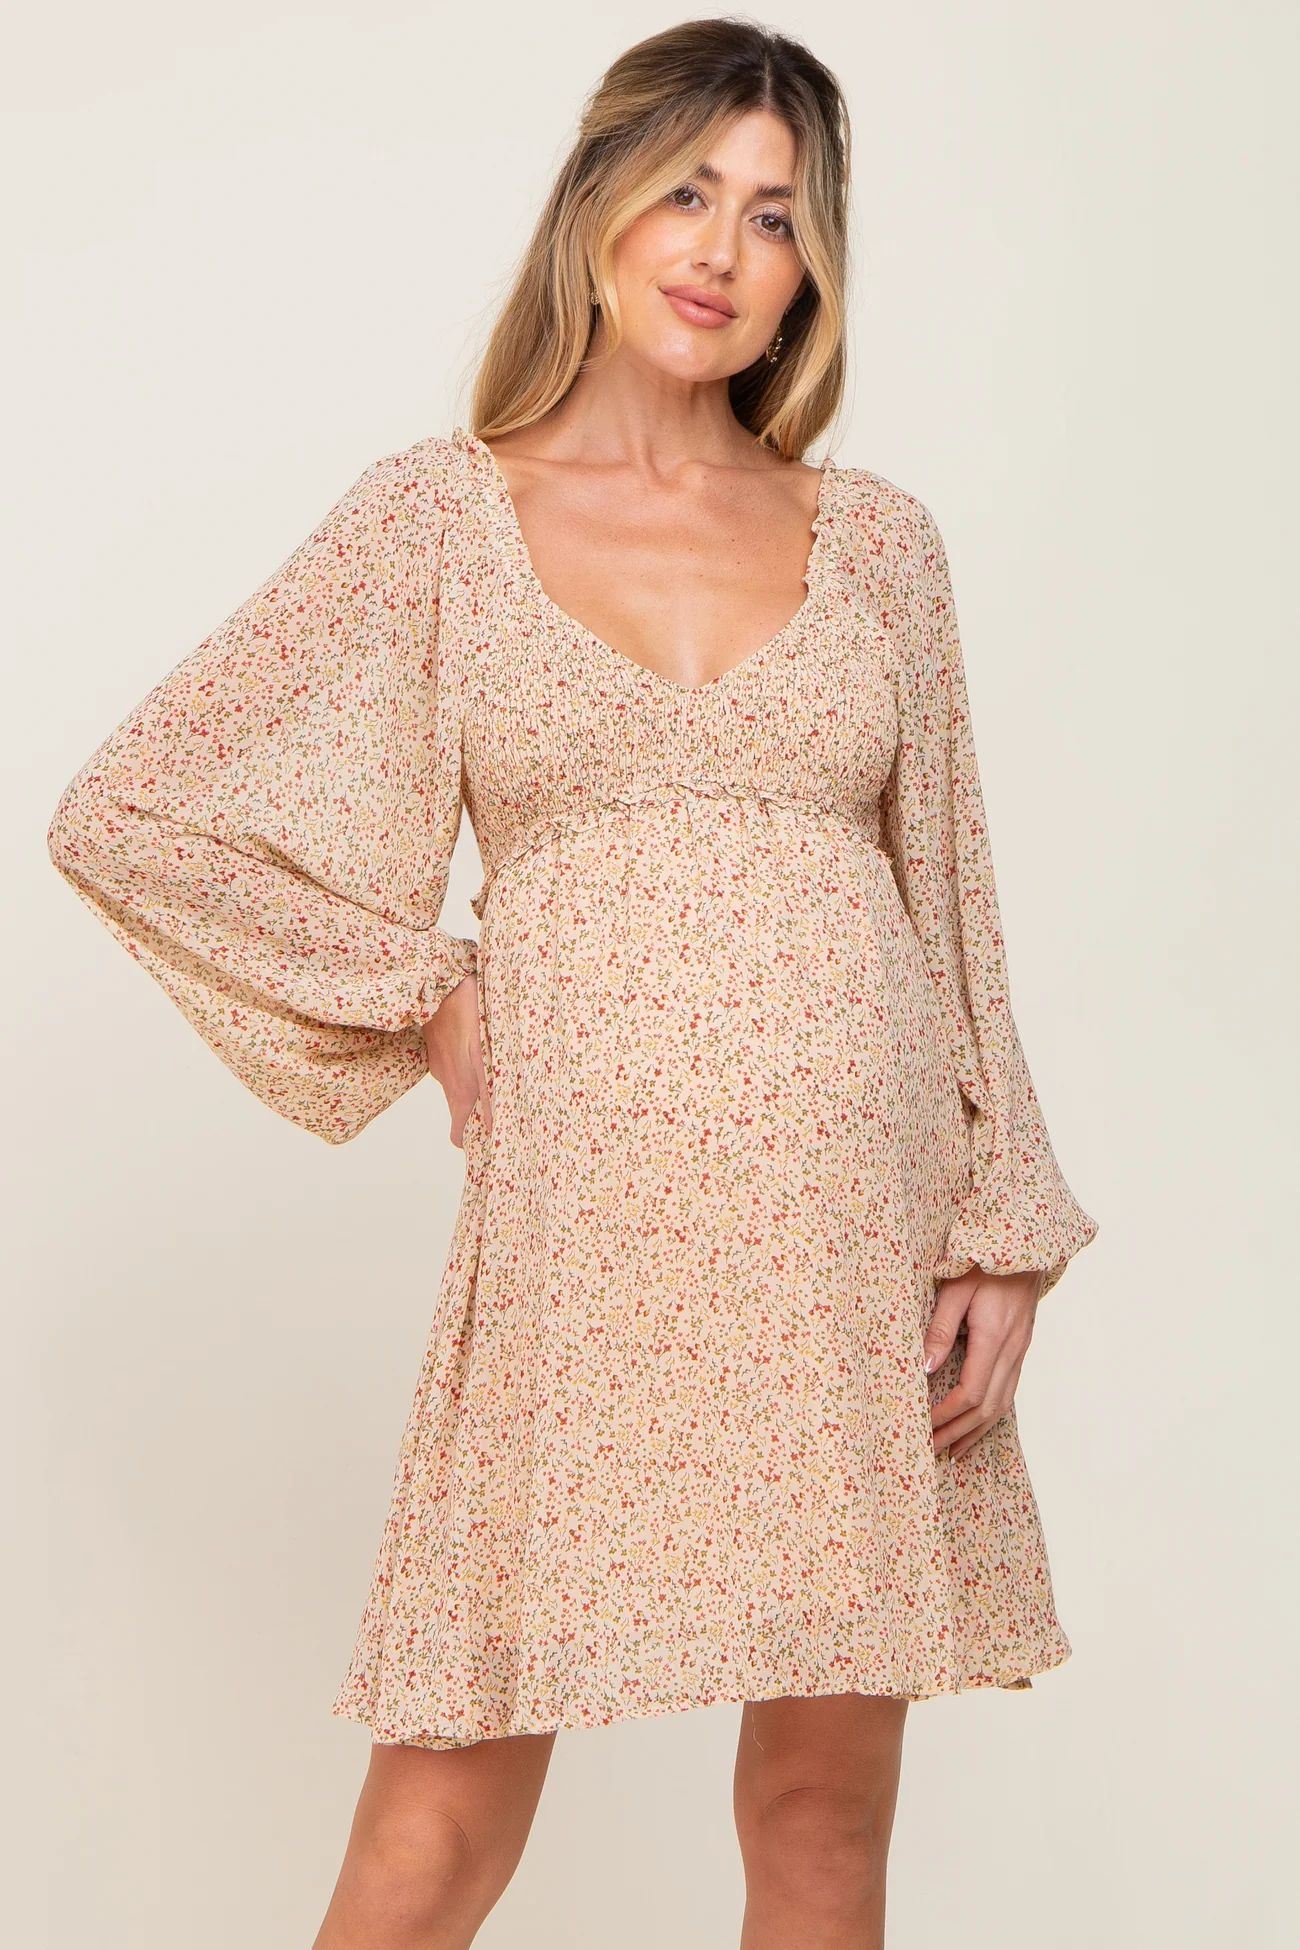 Beige Ditsy Floral Chiffon Smocked Maternity Dress | PinkBlush Maternity